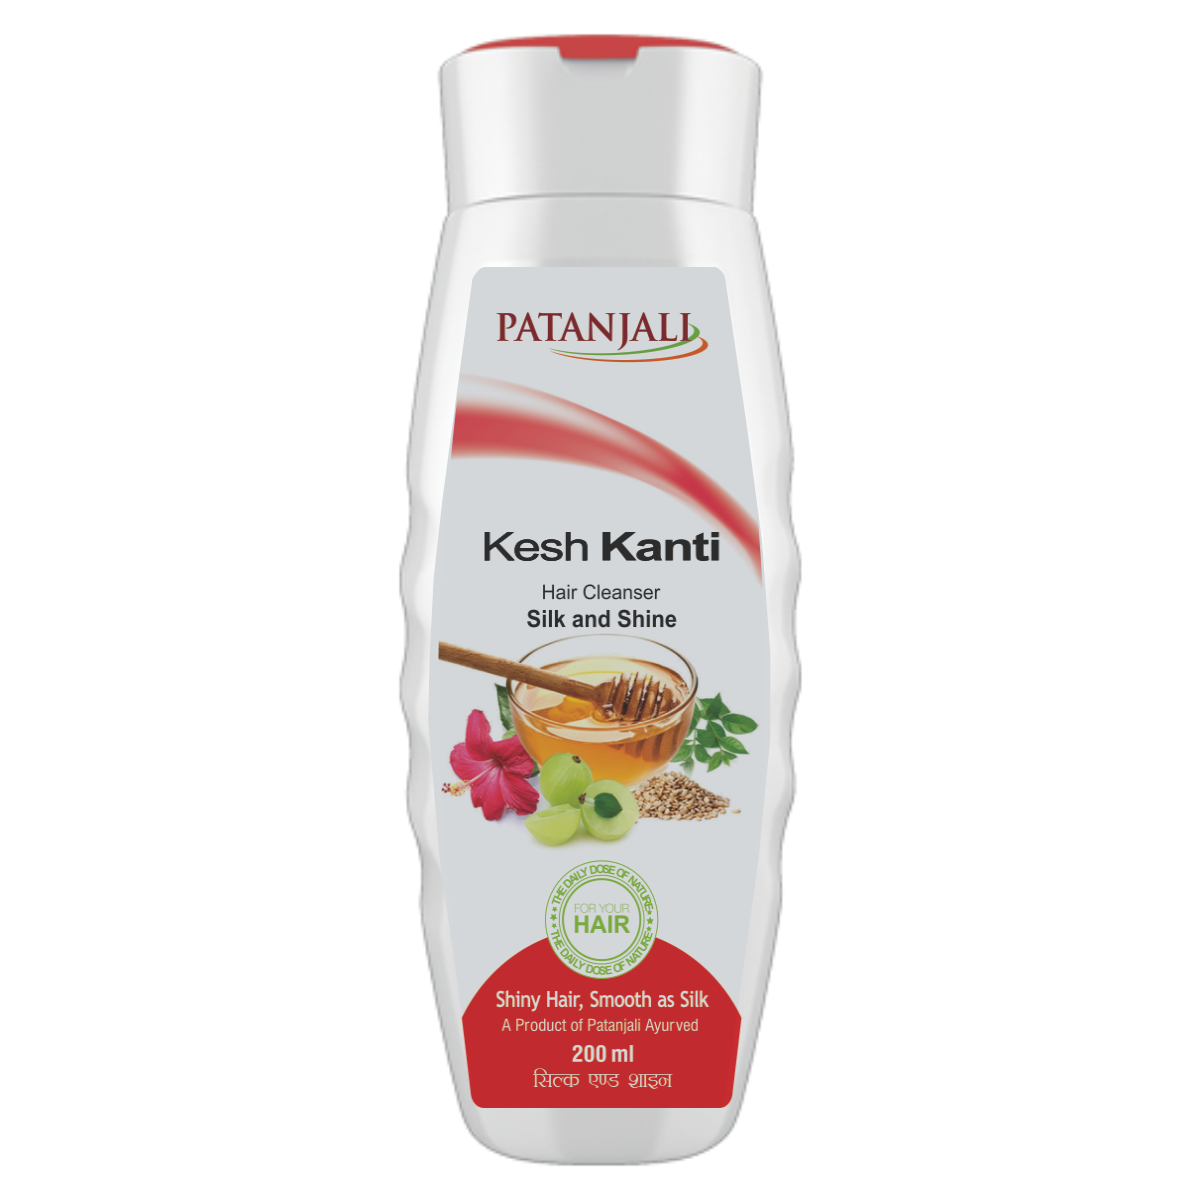 Patanjali Kesh Kanti Milk Protein Hair Cleanser 200 ml Price - Buy Online  at ₹120 in India